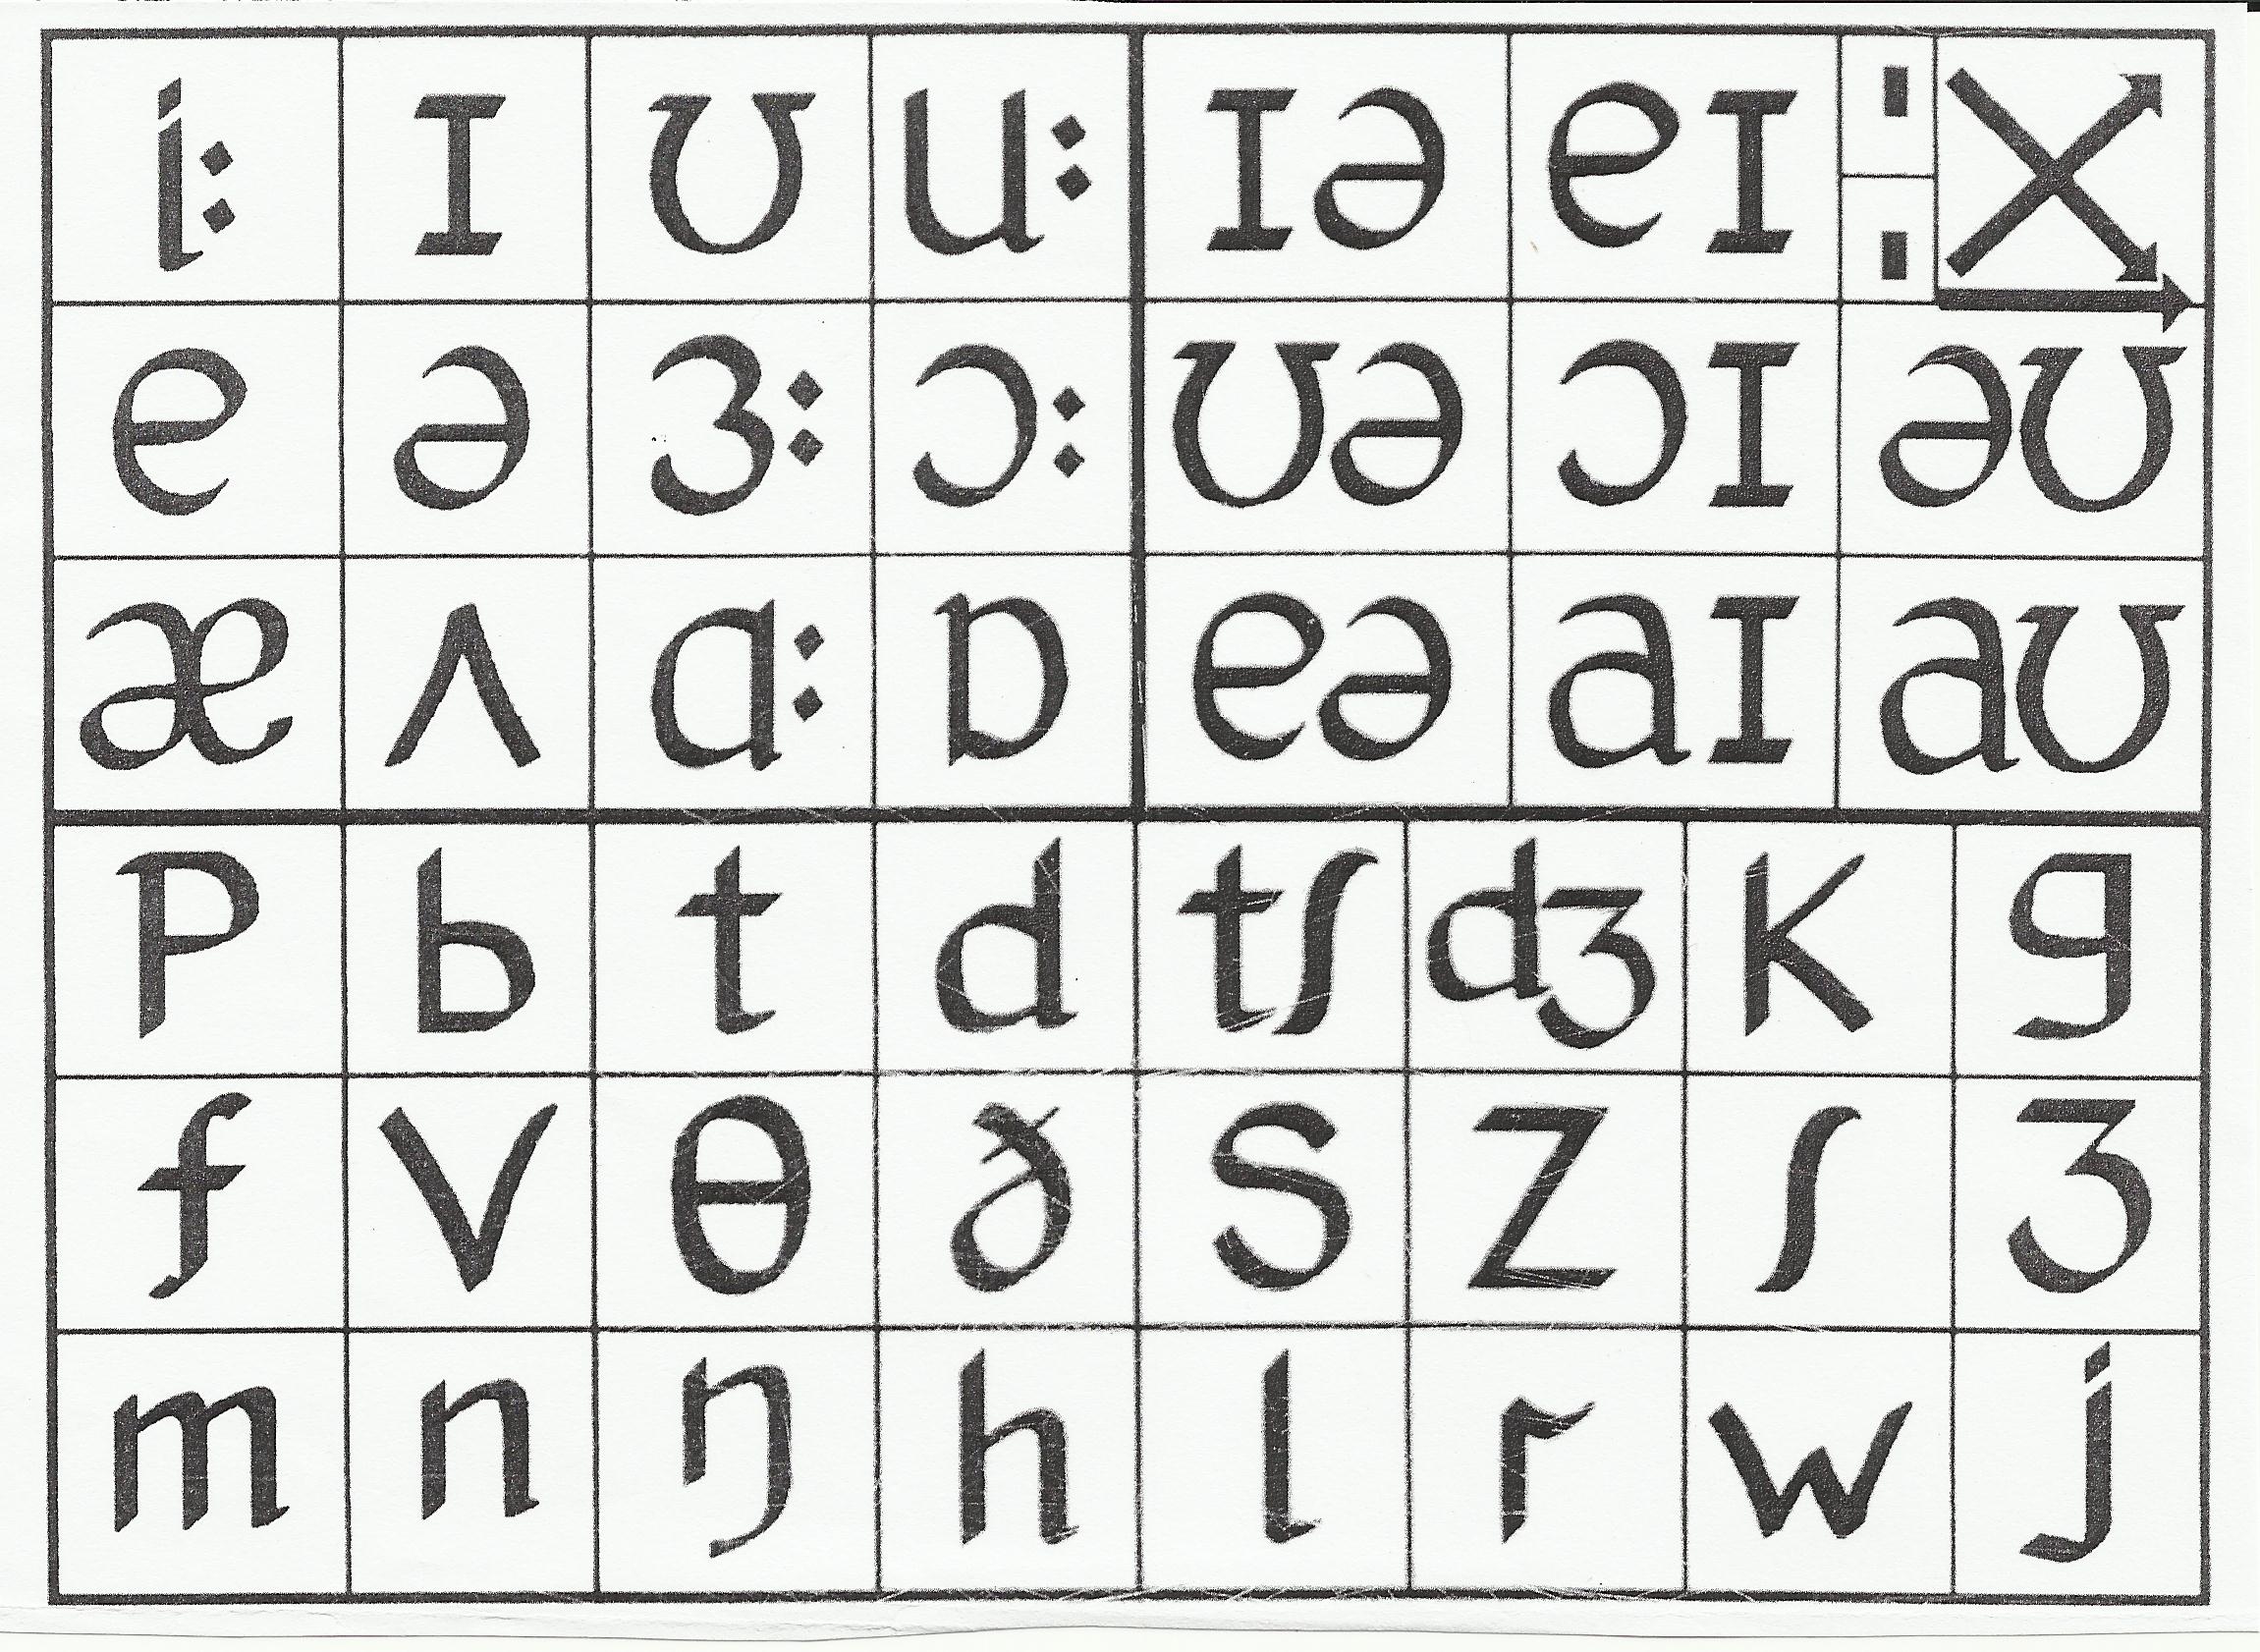 Using mnemonics to teach the phonemic chart | ELT stories